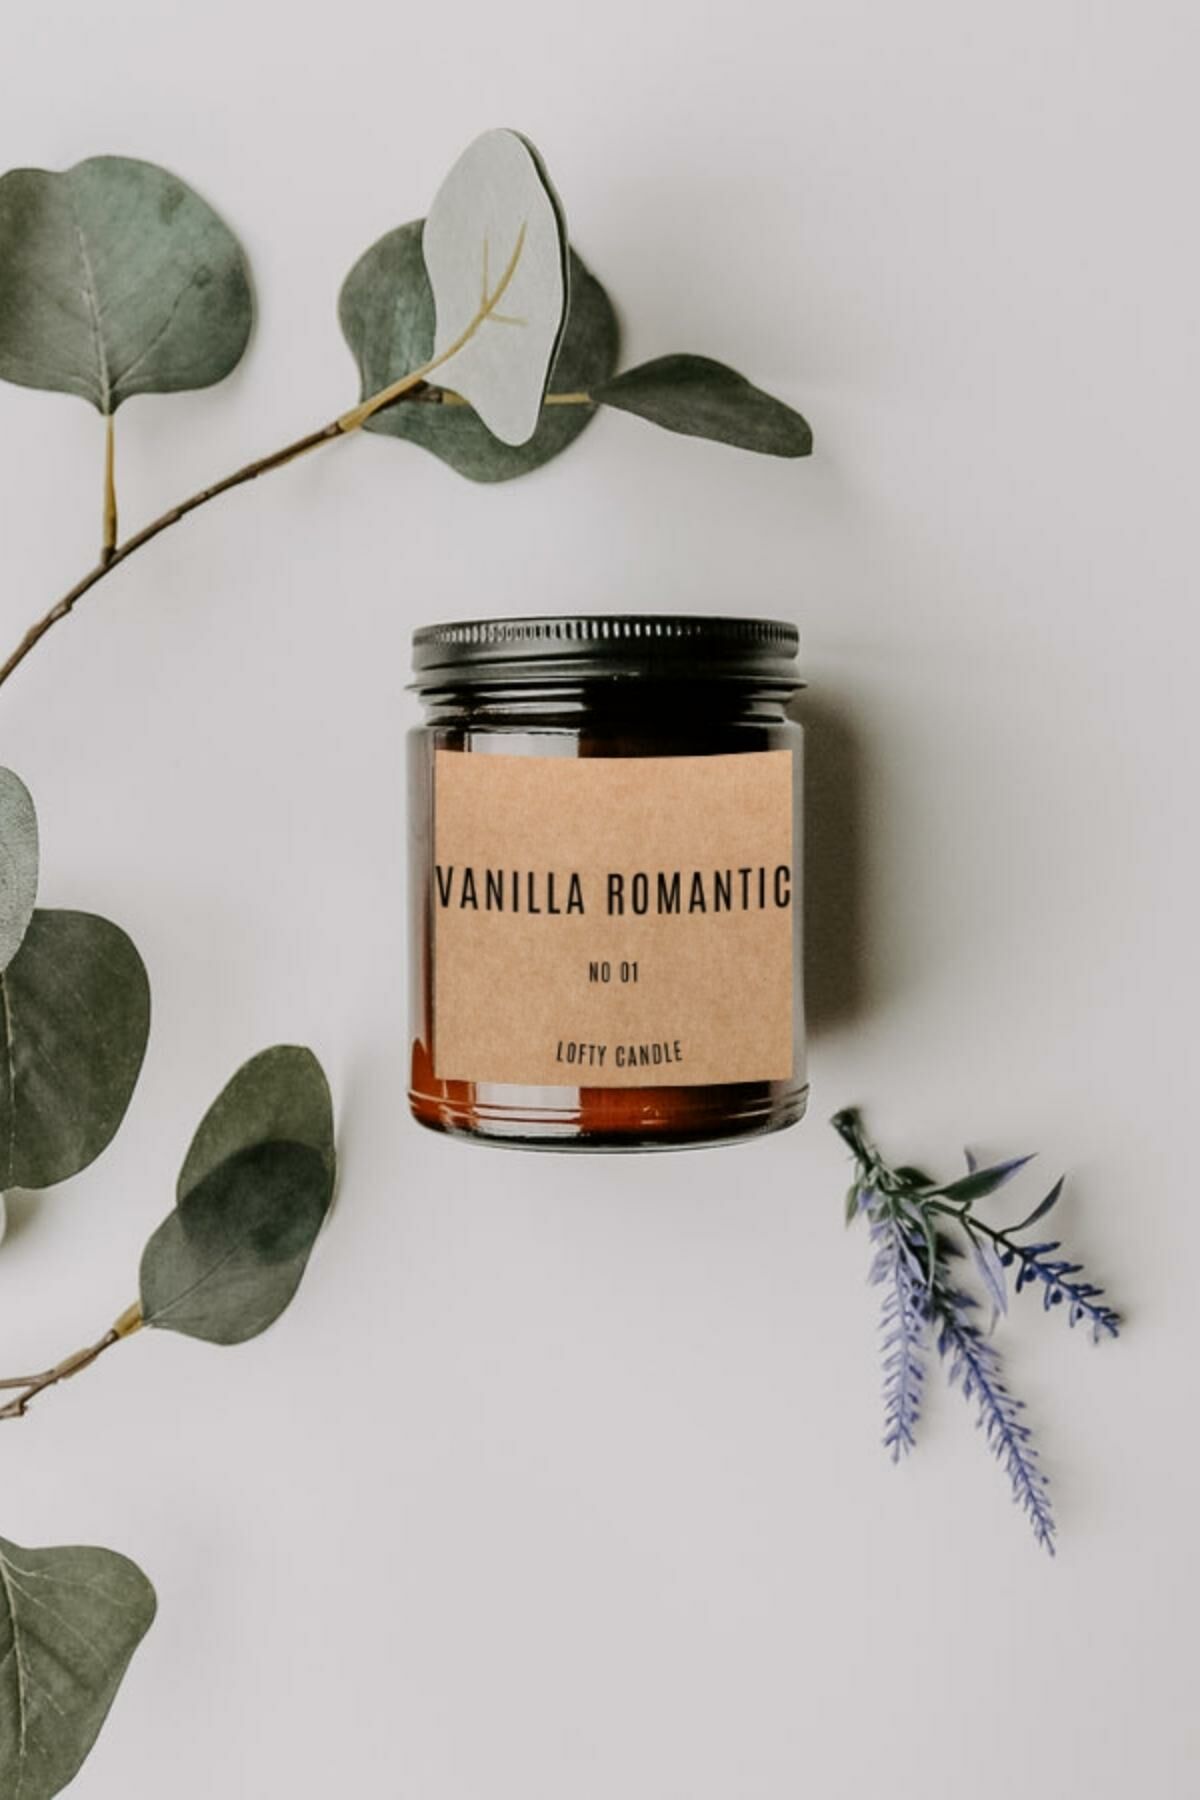 Vanilla Romantic Kraft Etiket Amber Kavanoz Mum Dekor Aromaterapi Rahatlatıcı Vanilya Kokusu 210 GR